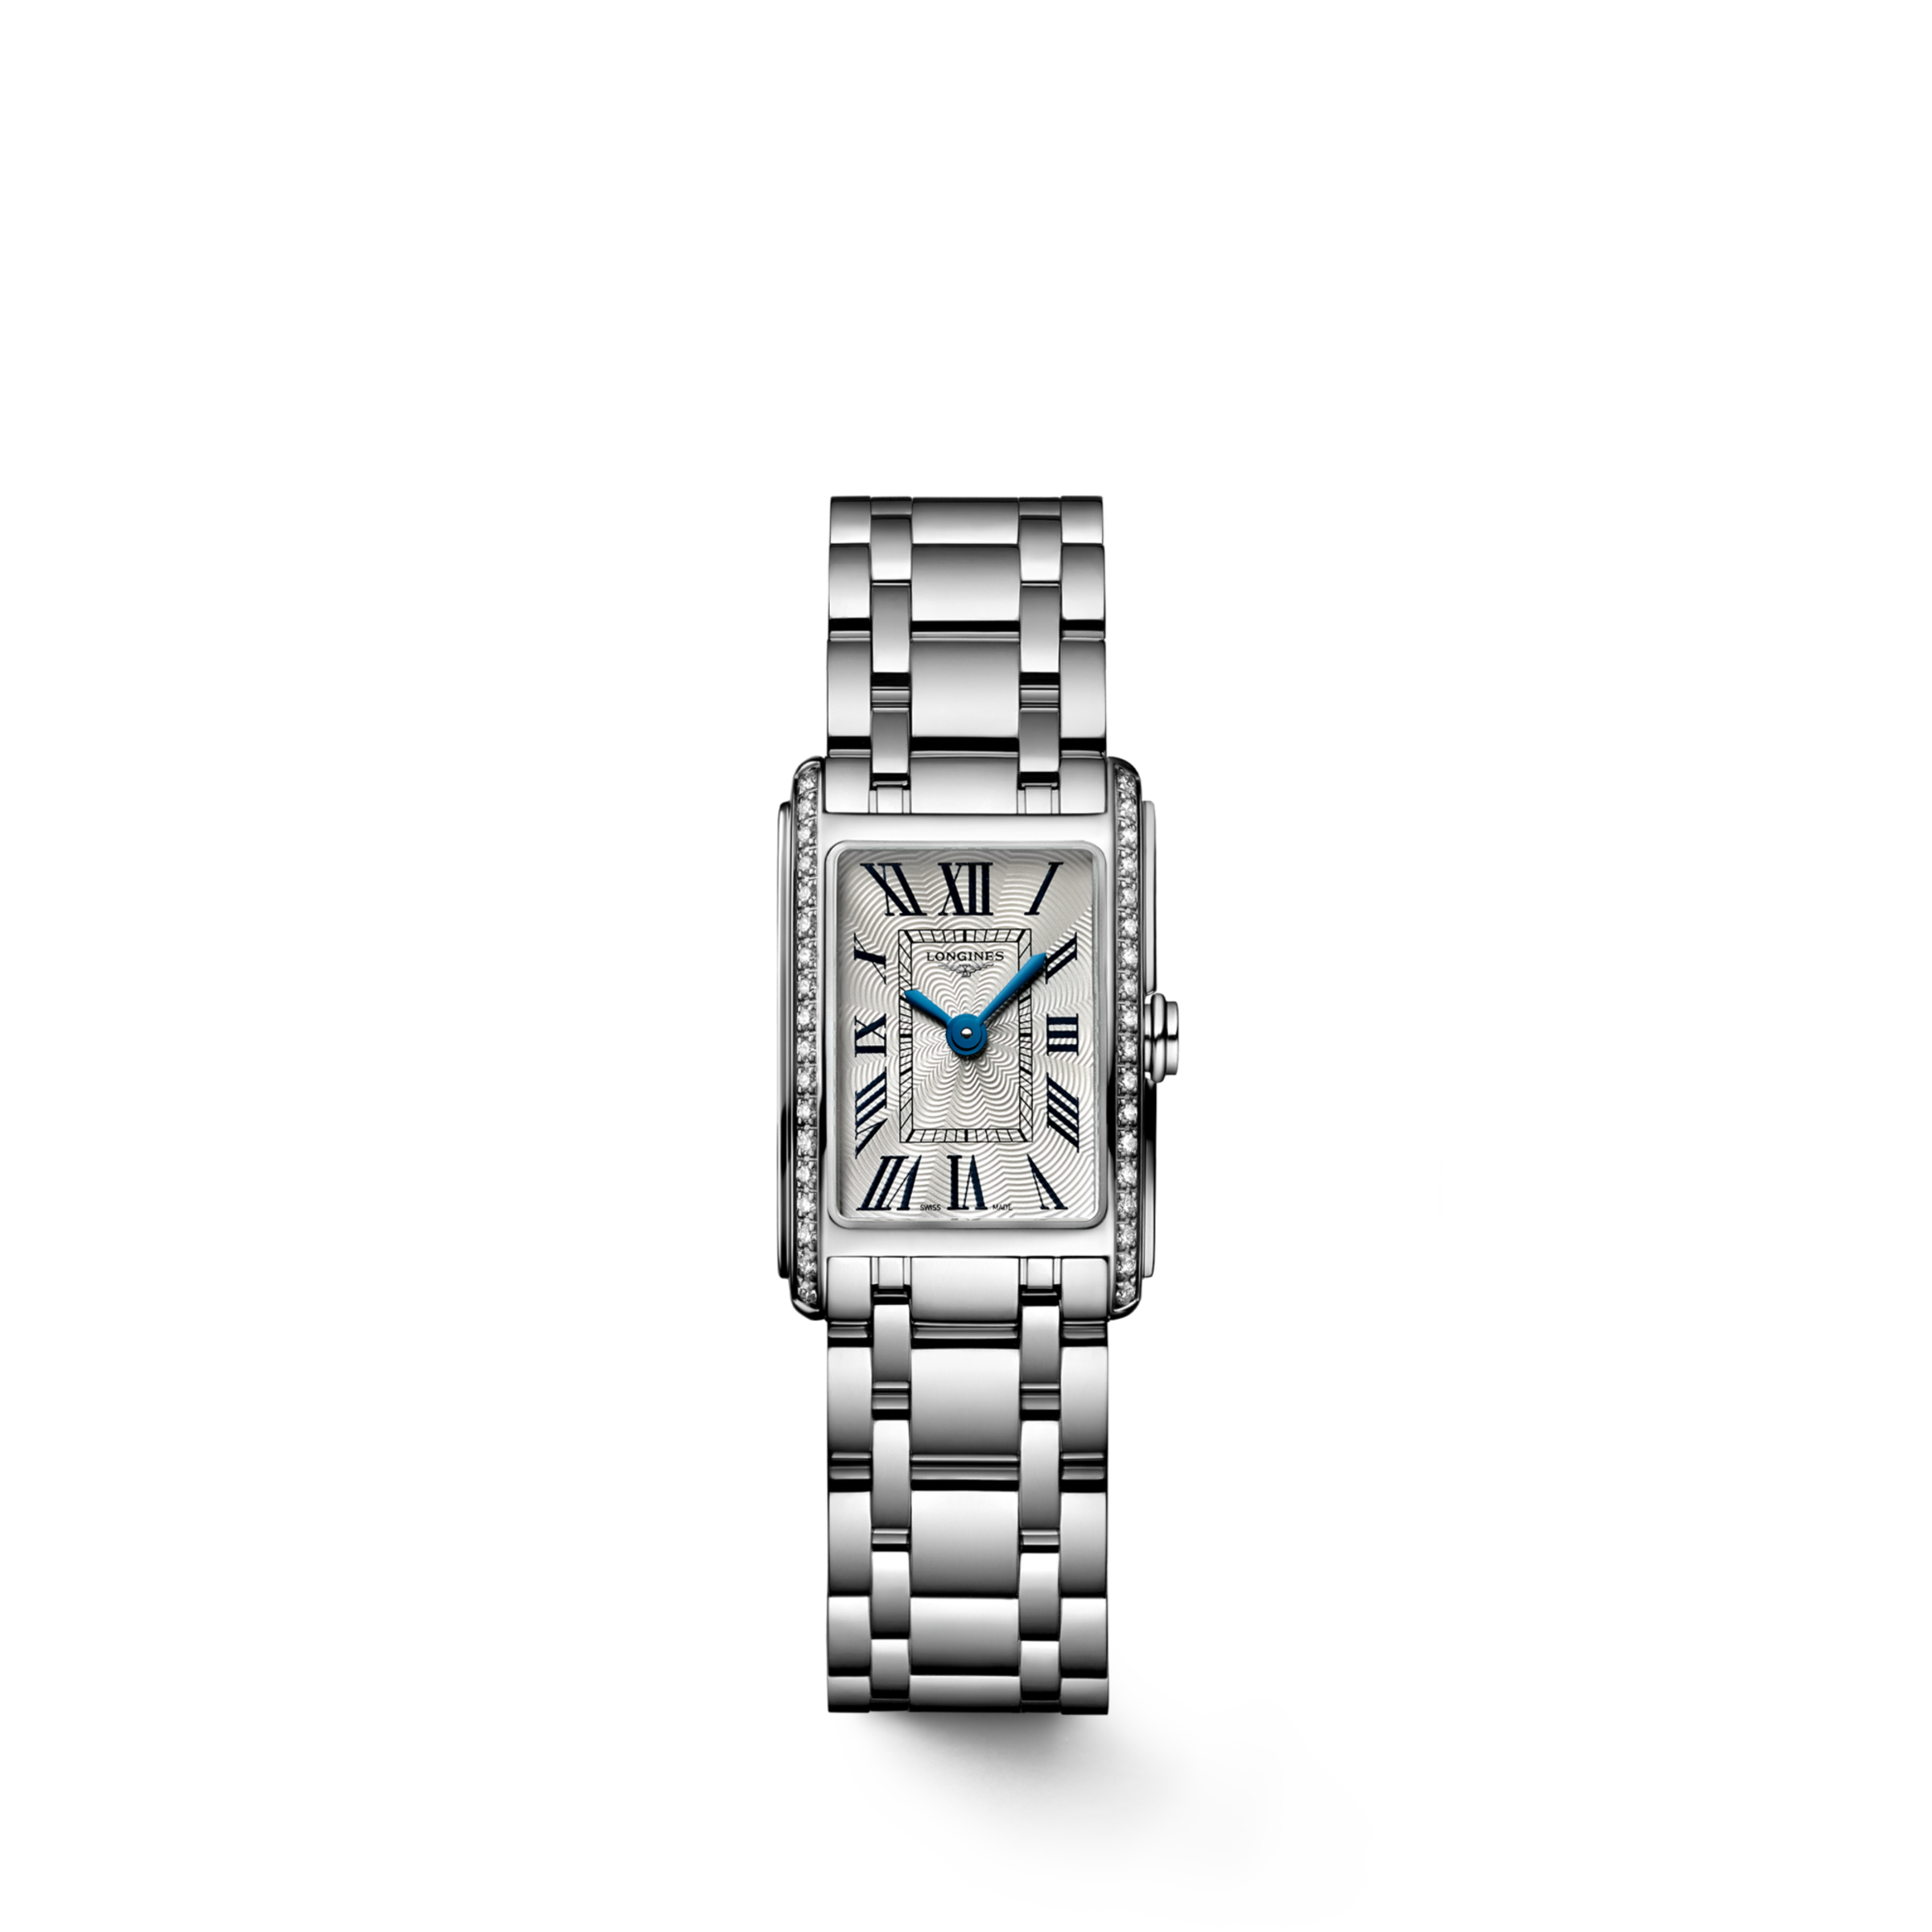 Longines DOLCEVITA Quartz Stainless steel Watch - L5.258.0.71.6